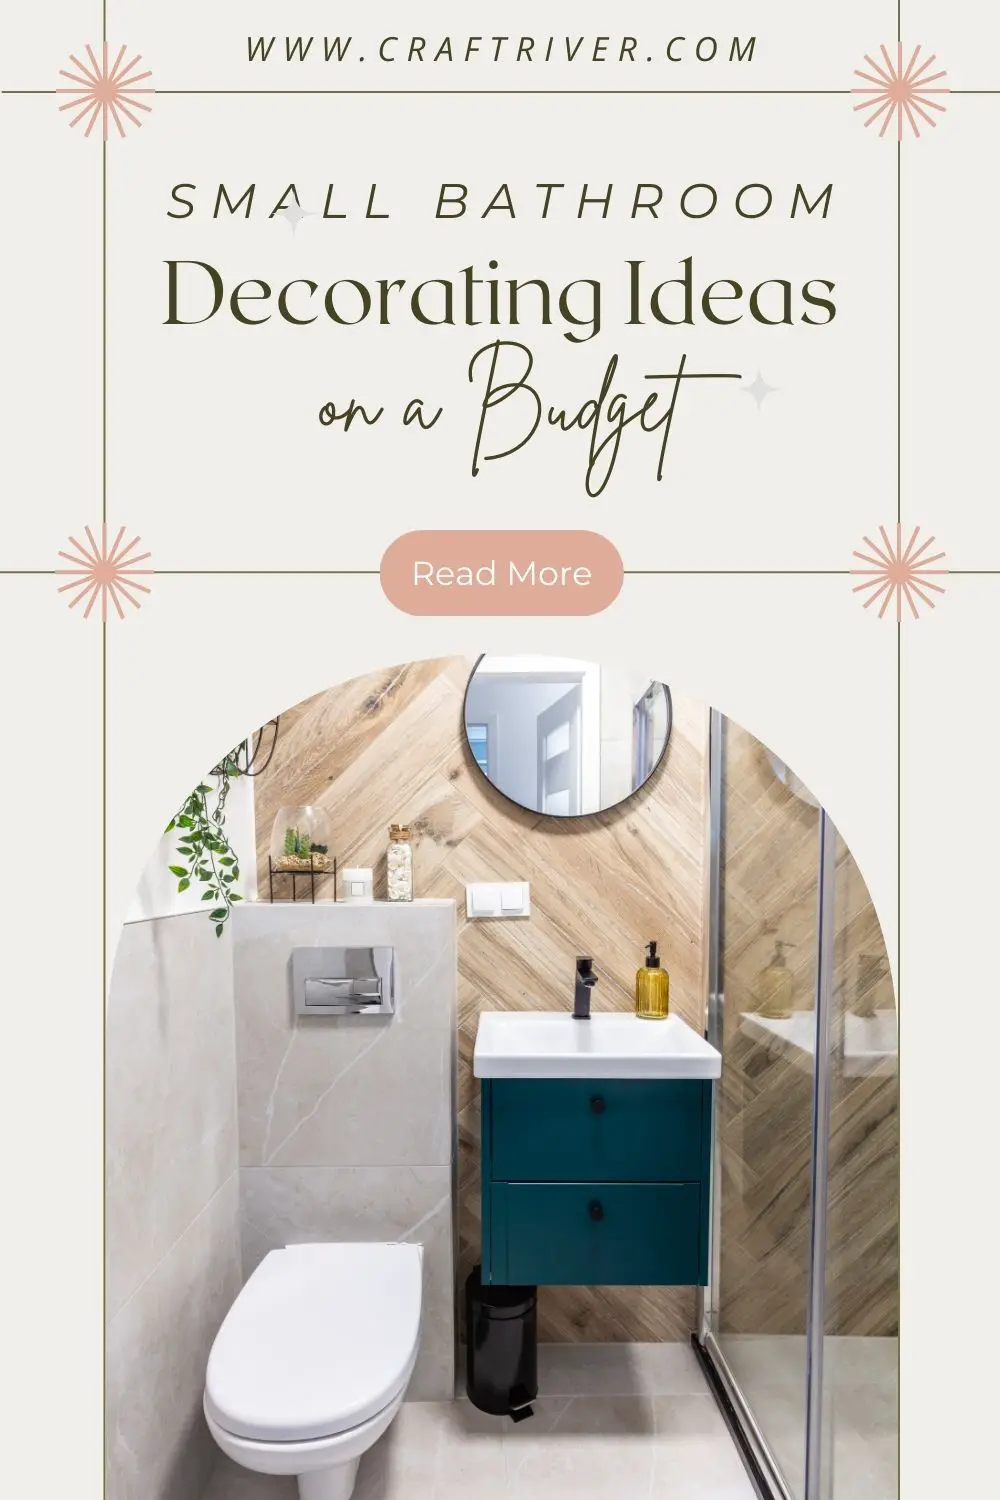 Small Bathroom Decorating Ideas on a Budget